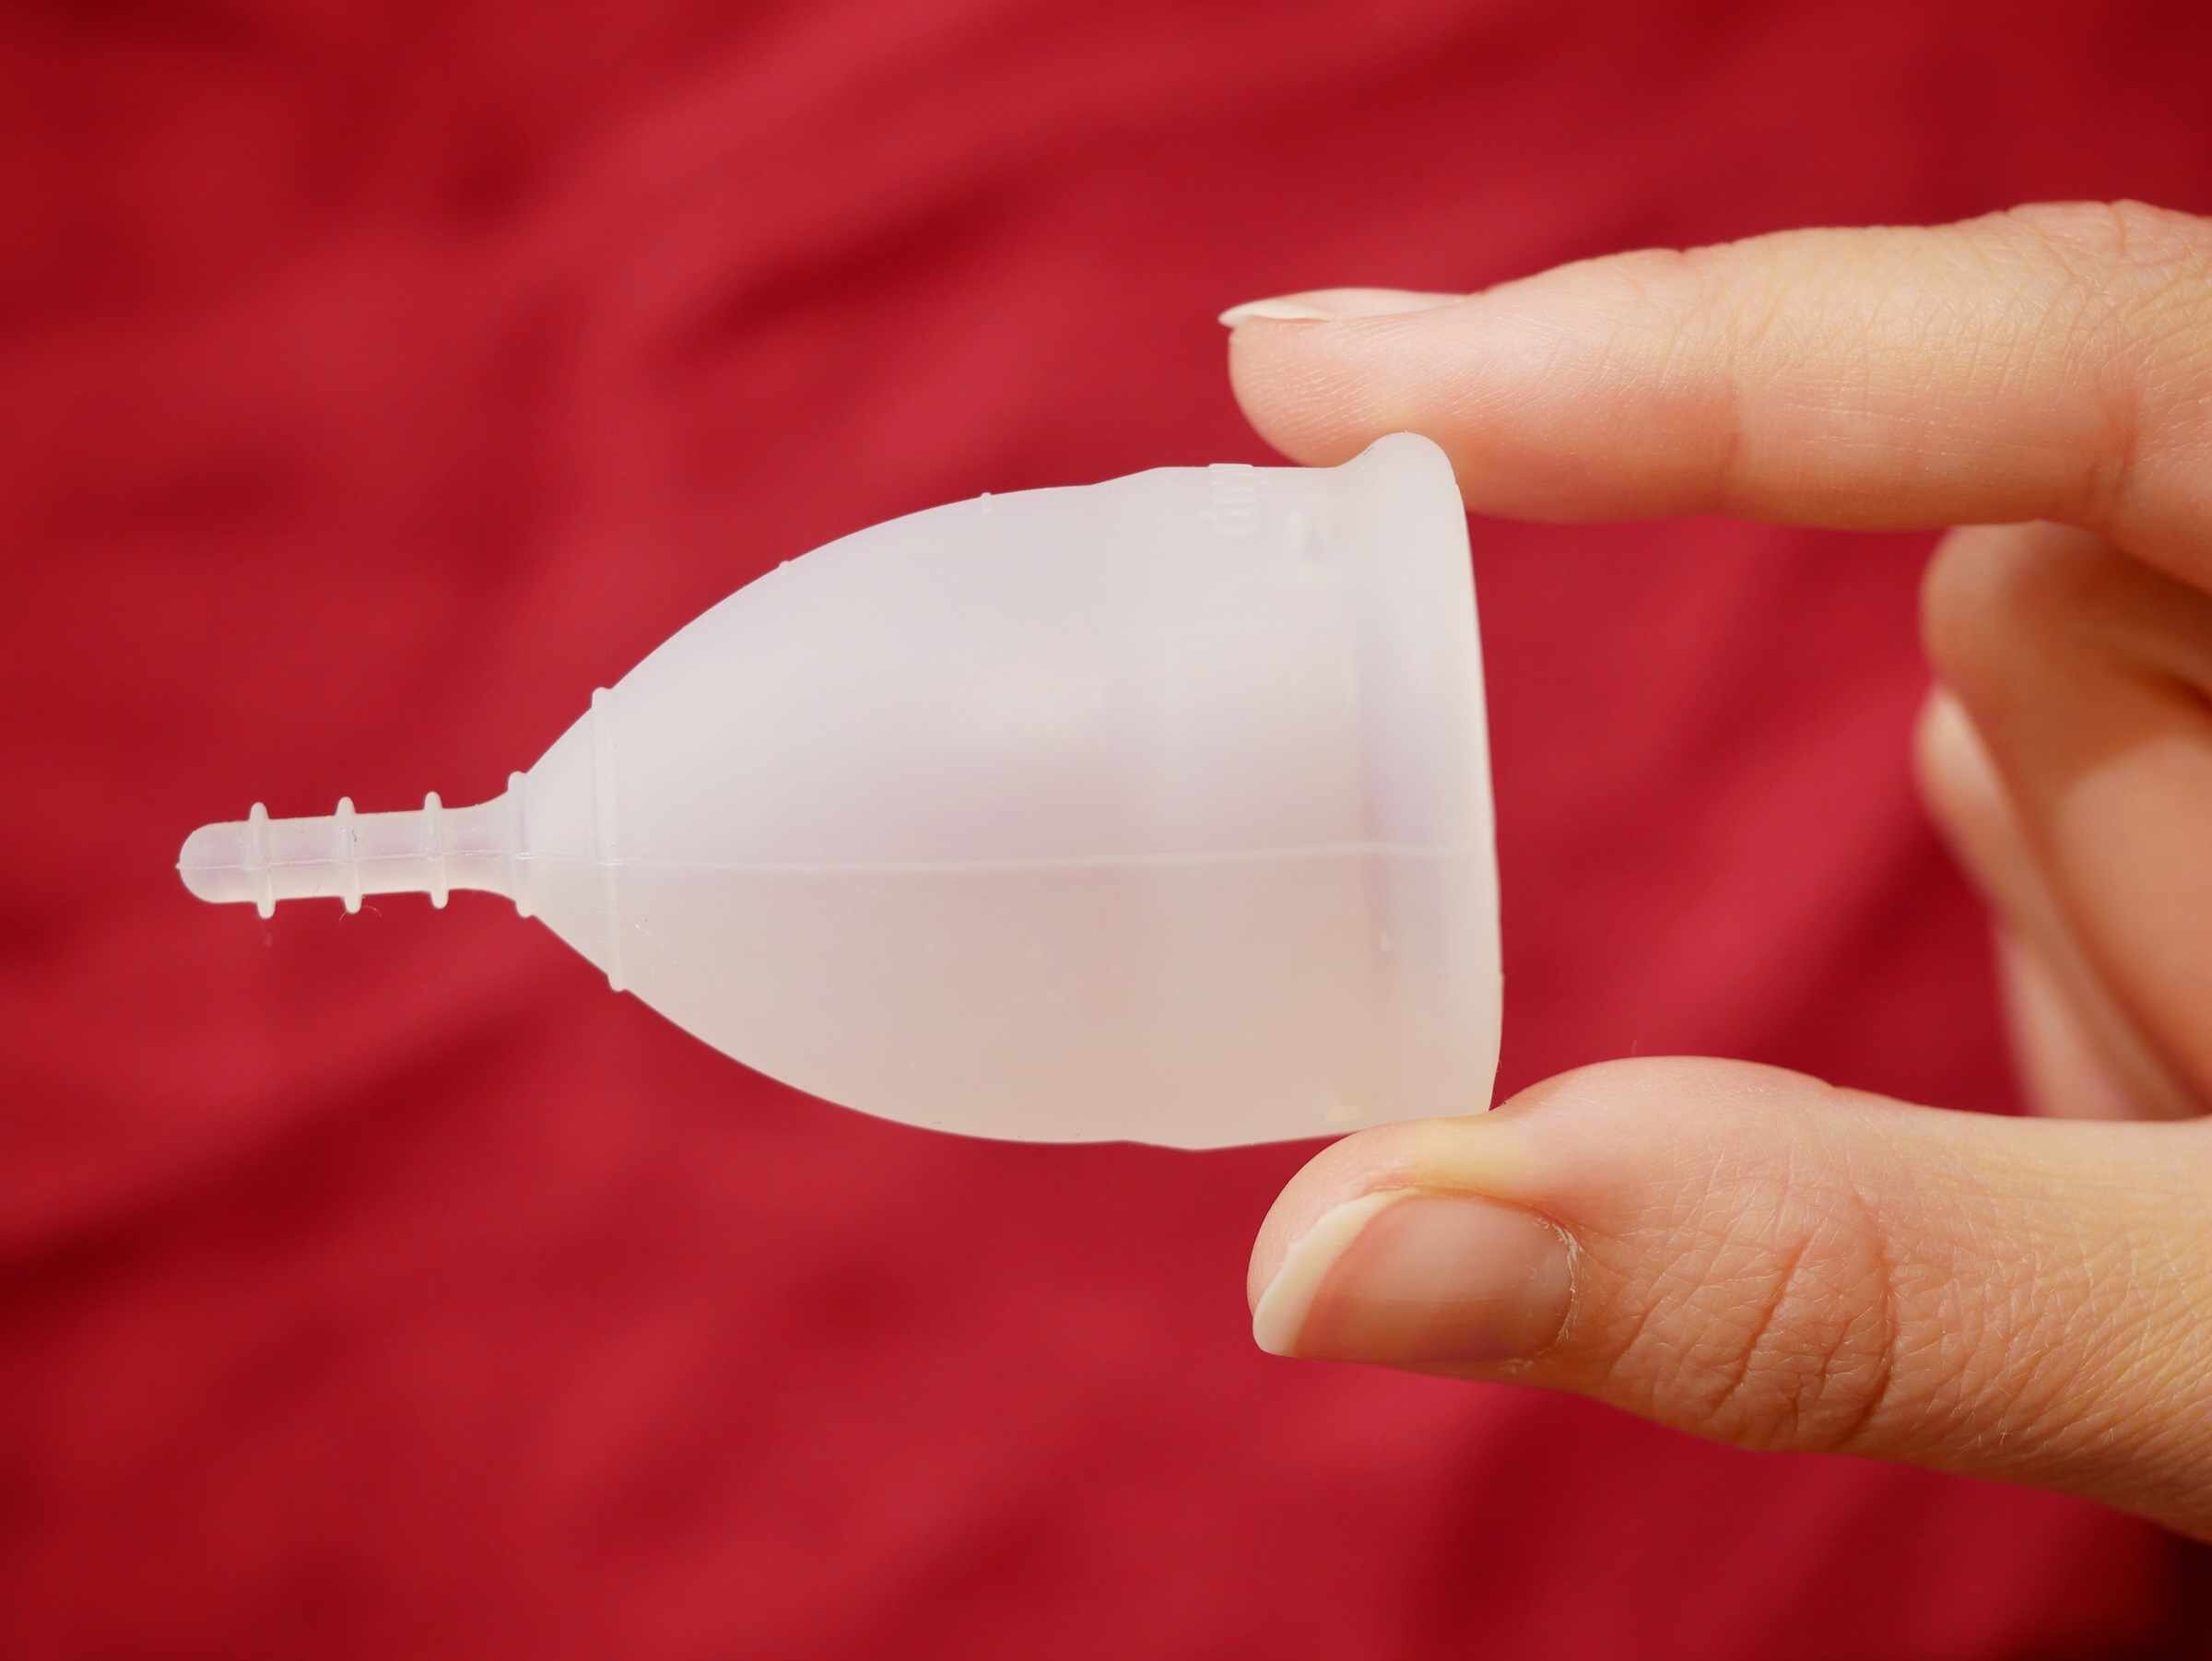 https://scx2.b-cdn.net/gfx/news/hires/2022/menstrual-cups-why-the.jpg